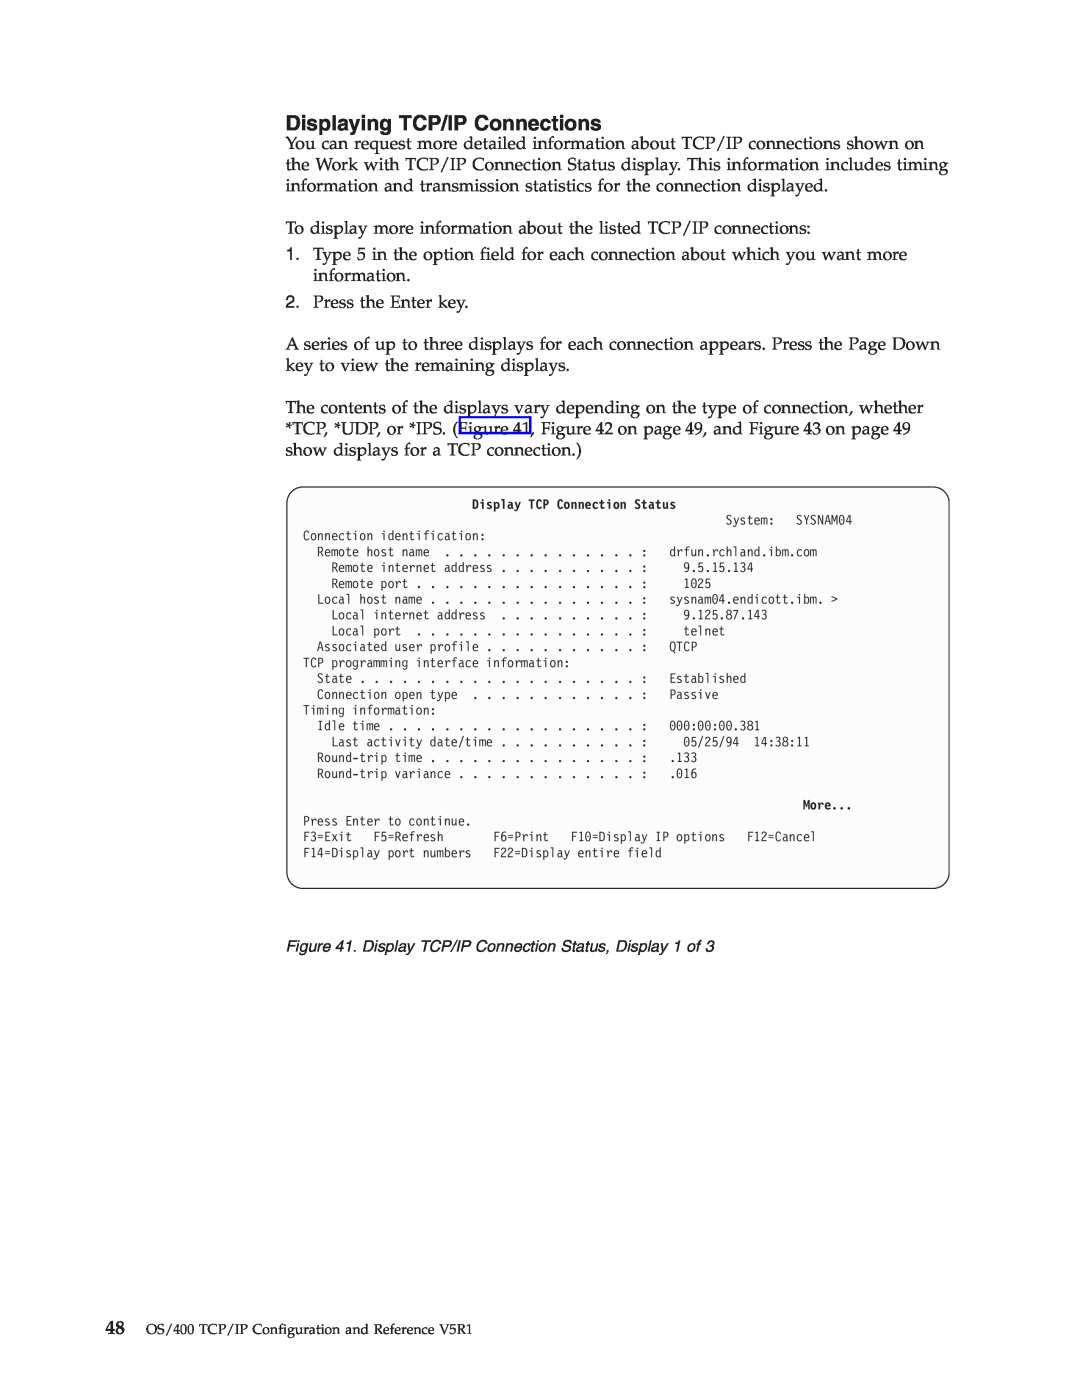 IBM SC41-5420-04 manual Displaying TCP/IP Connections 